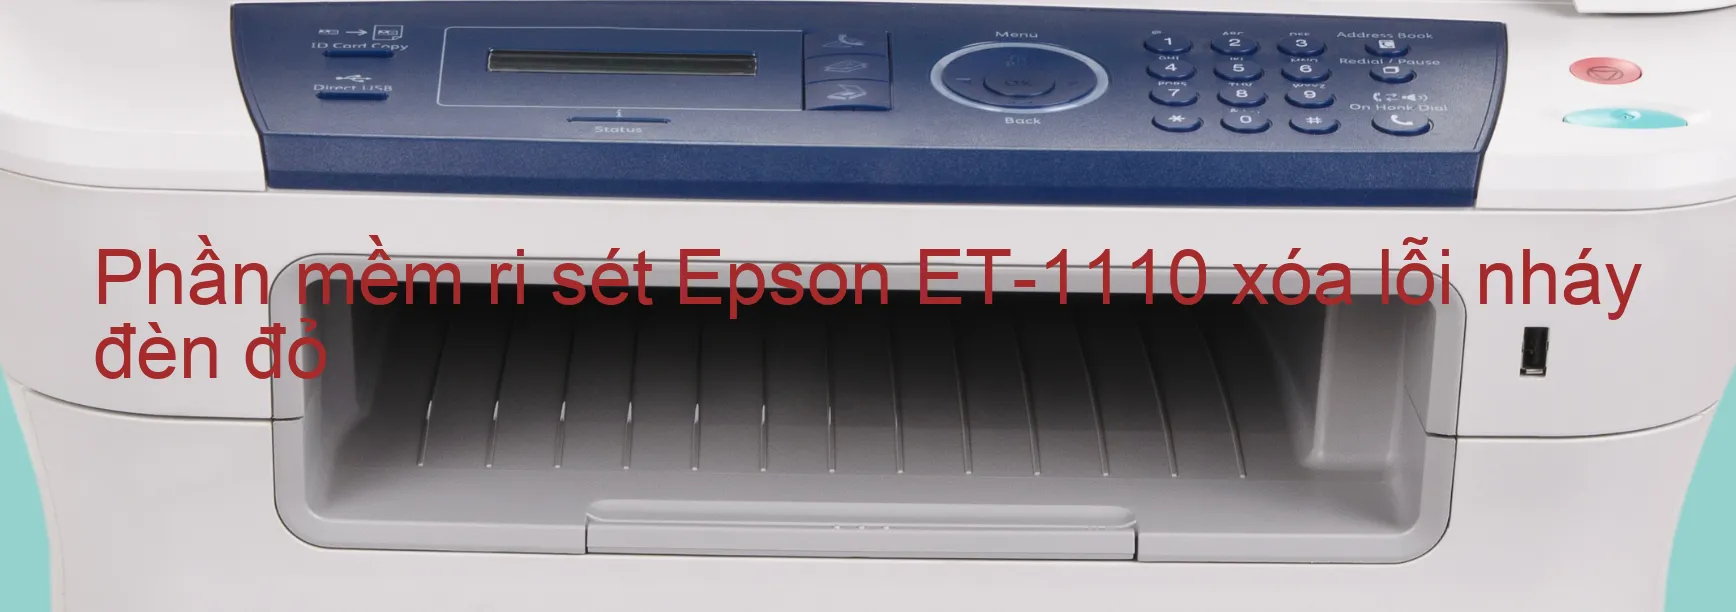 Phần mềm reset Epson ET-1110 xóa lỗi nháy đèn đỏ